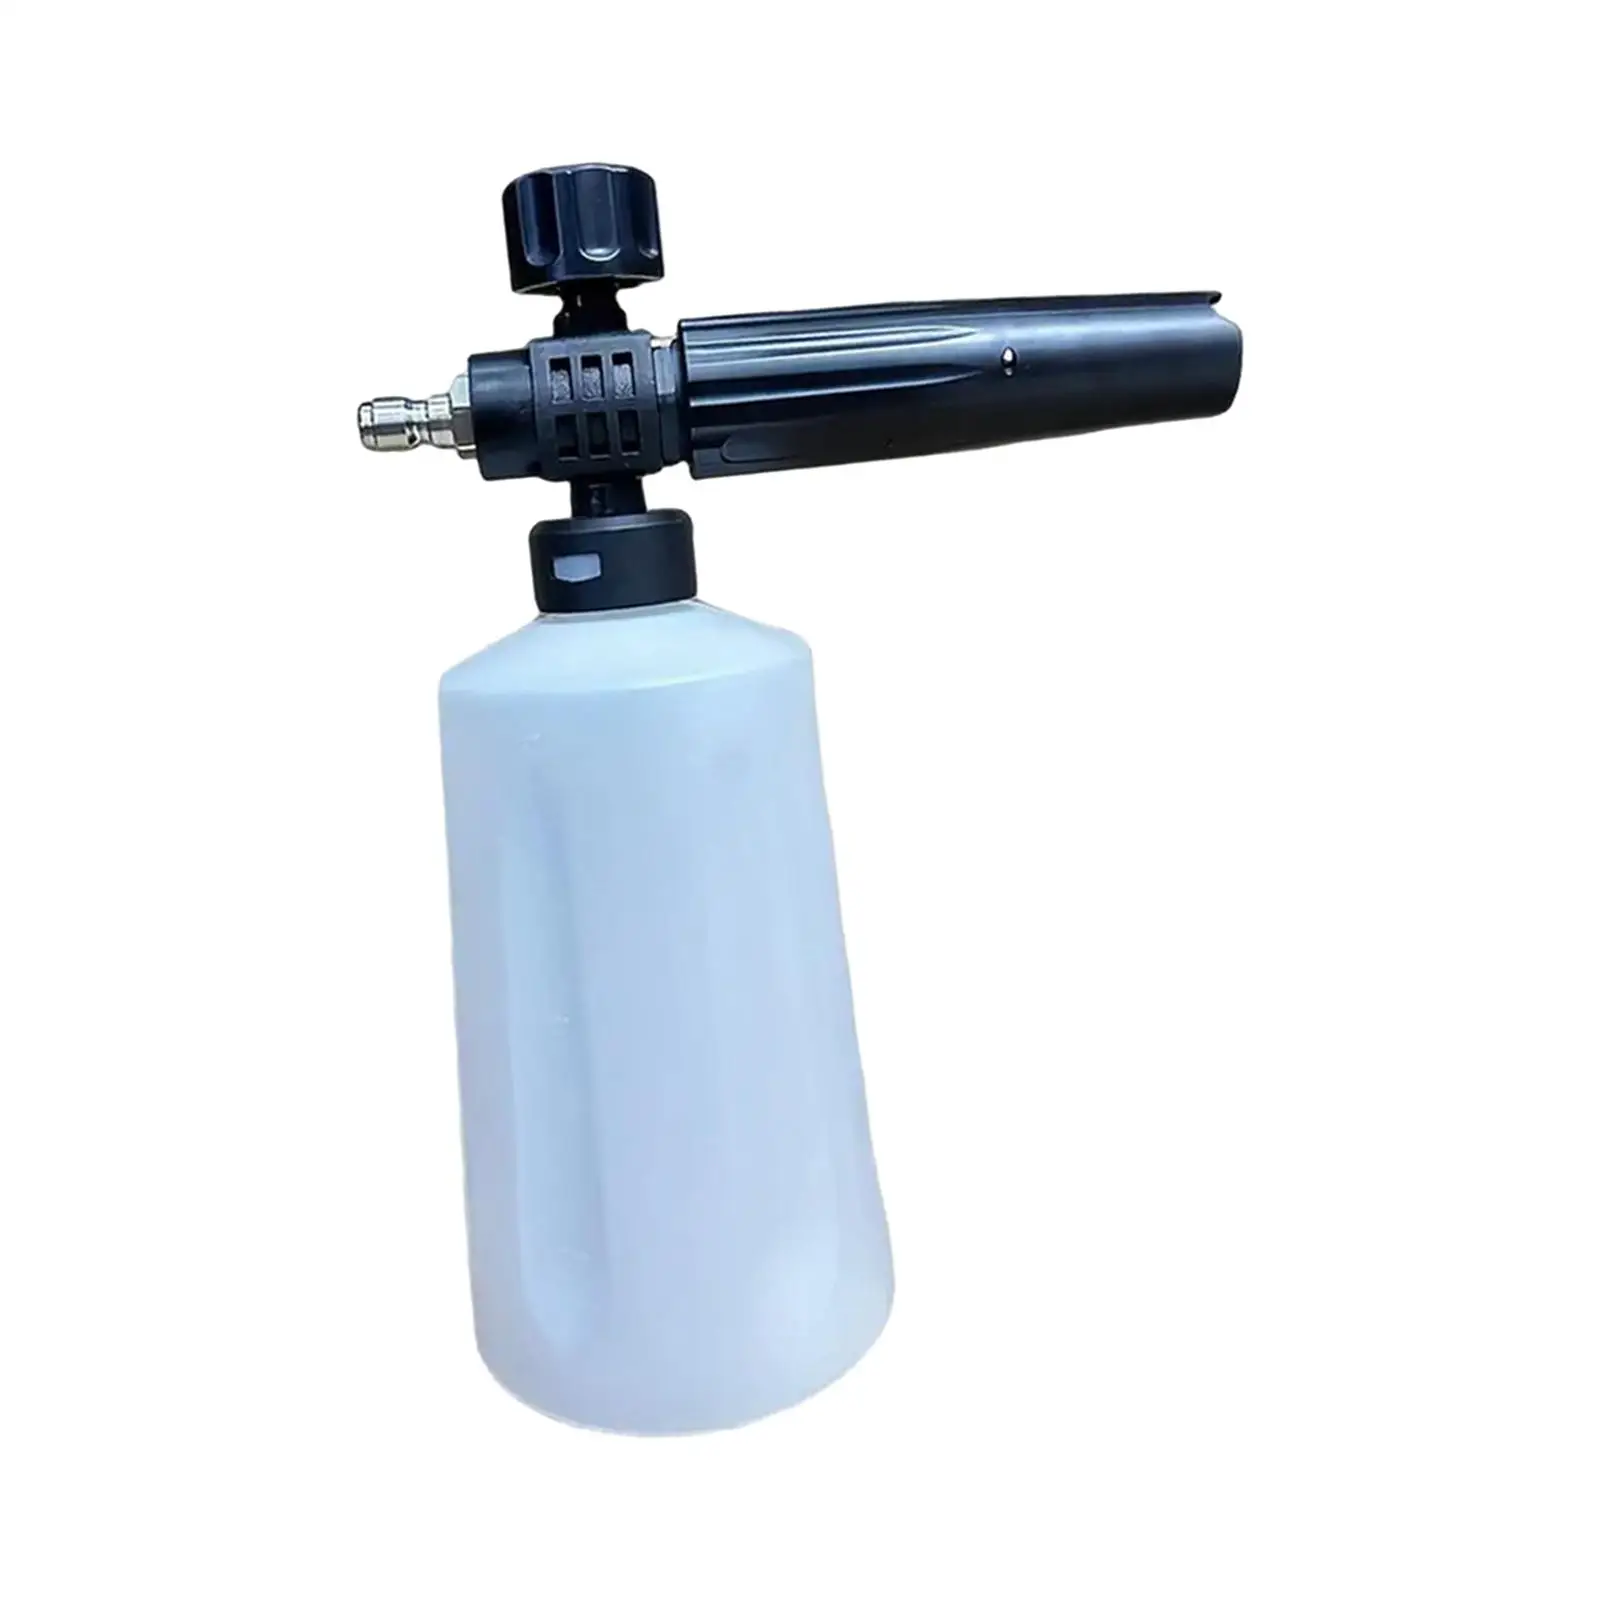 Car Hand Pump Pressure Foam Sprayer Adjustable Nozzle Hand Pressurized 700ml Soap Sprayer for Car Window Washing House Cleaning